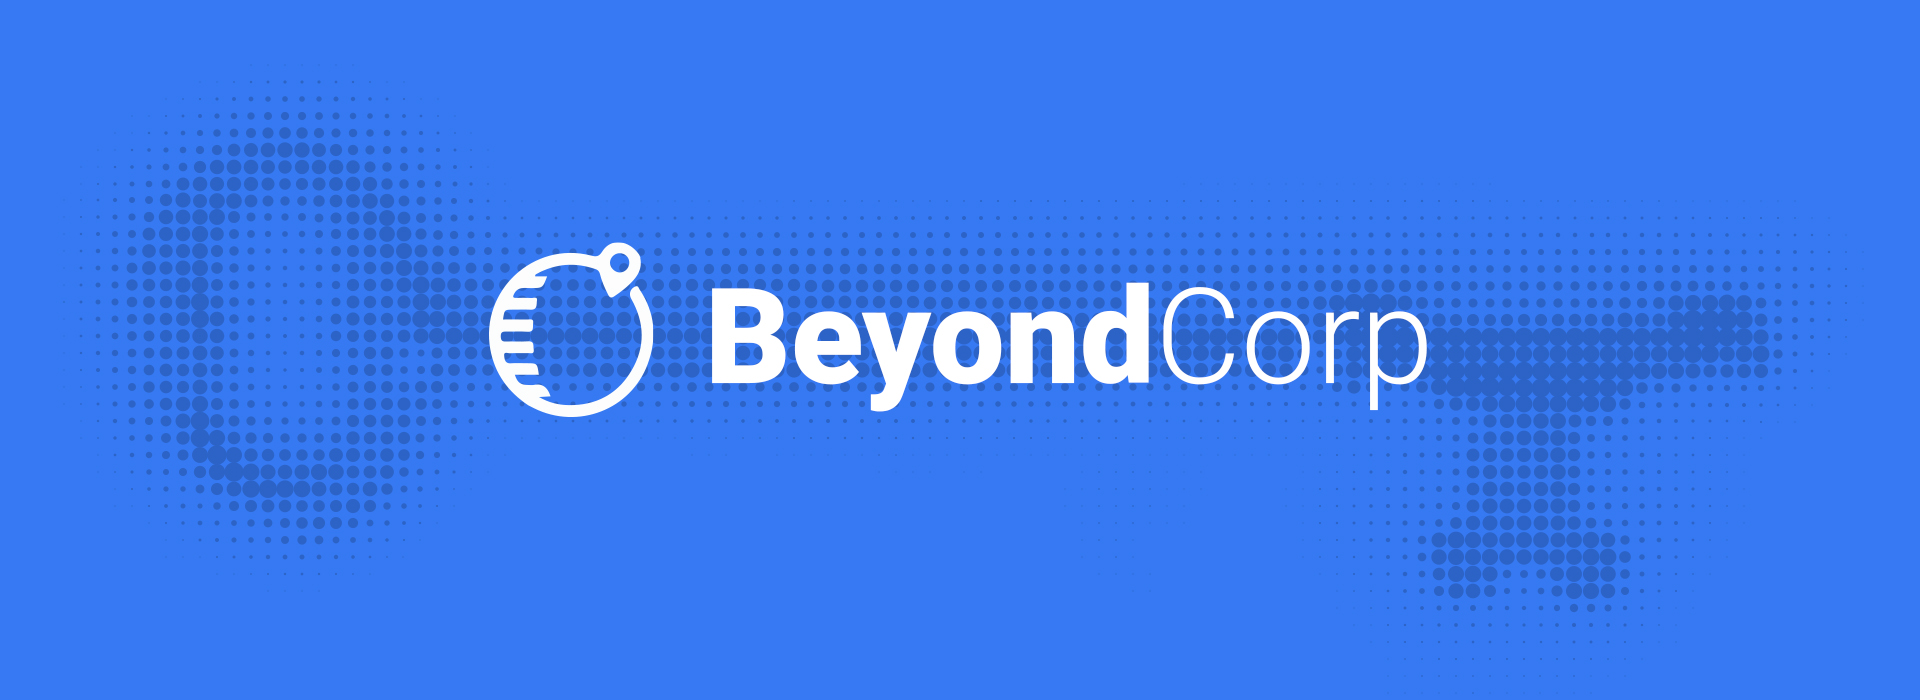 beyondcorp guiding principles